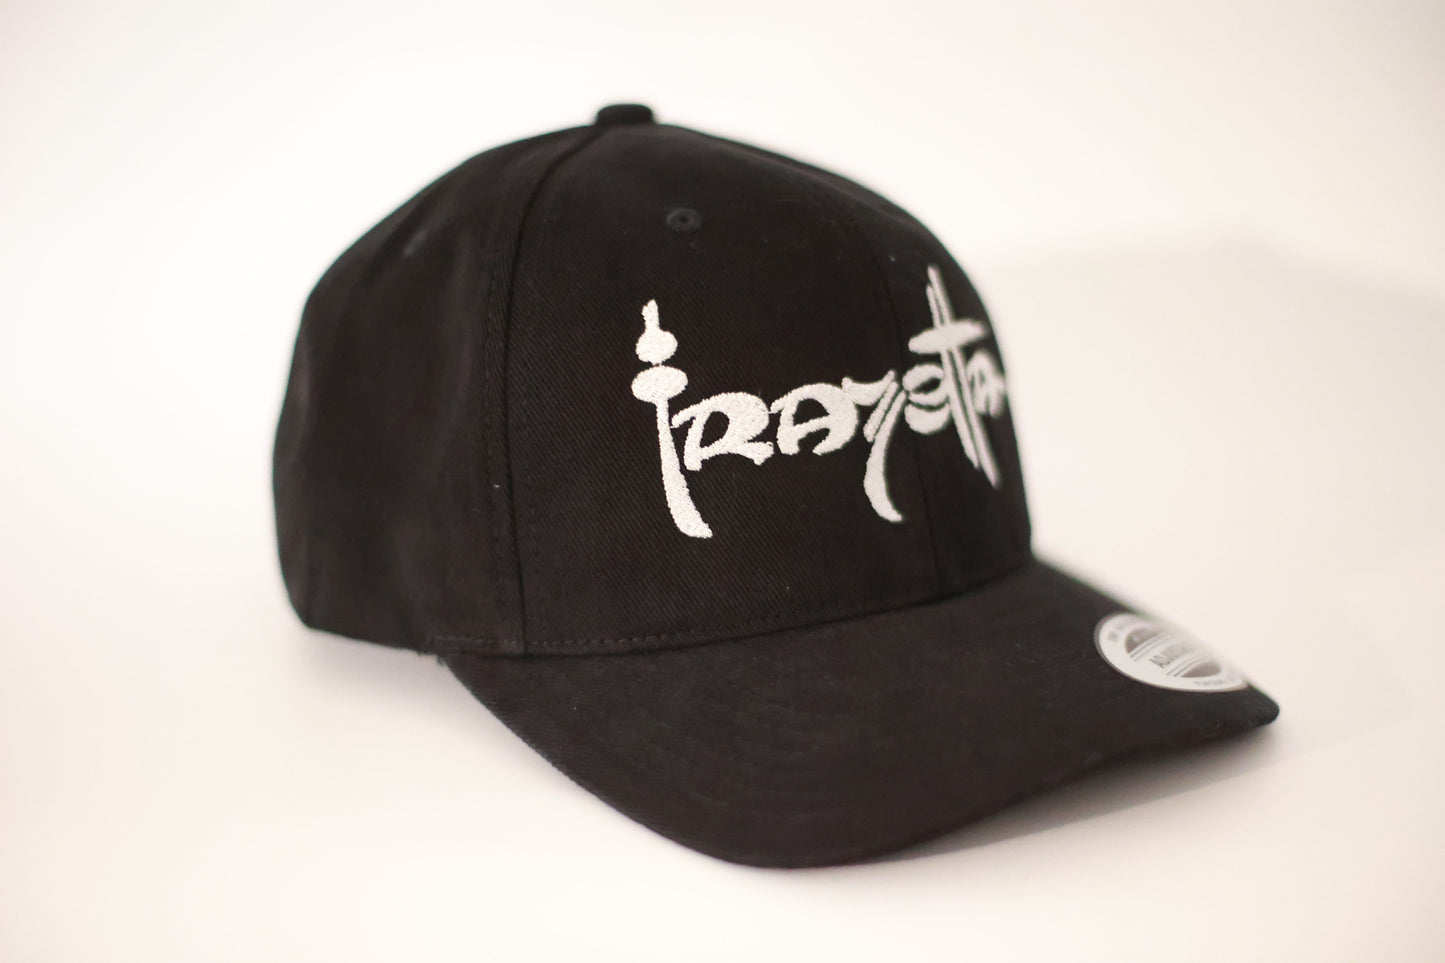 Frazetta Signature Hat Black with Silver